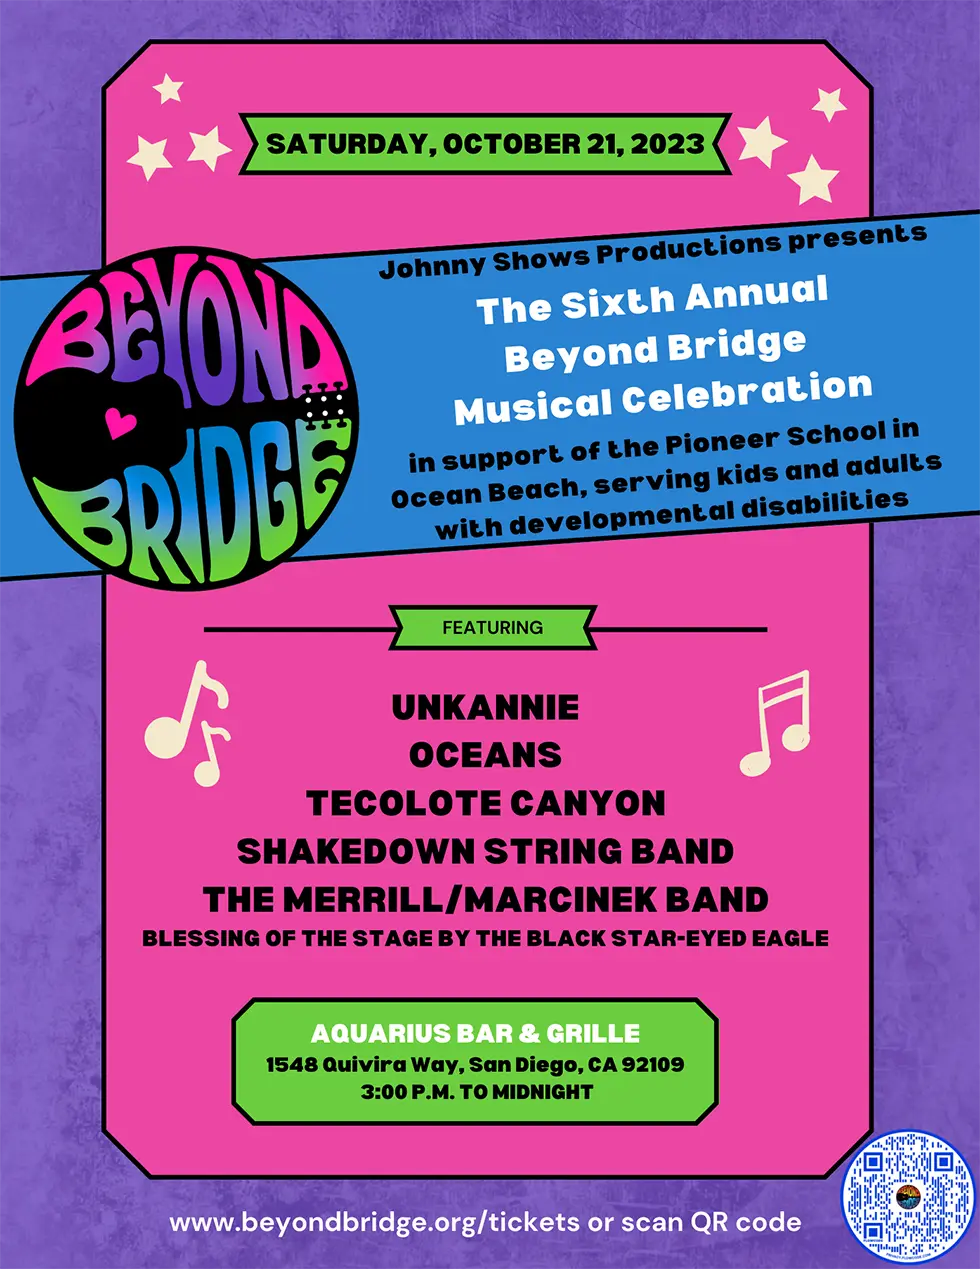 BEYOND BRIDGE MUSICAL CELEBRATION